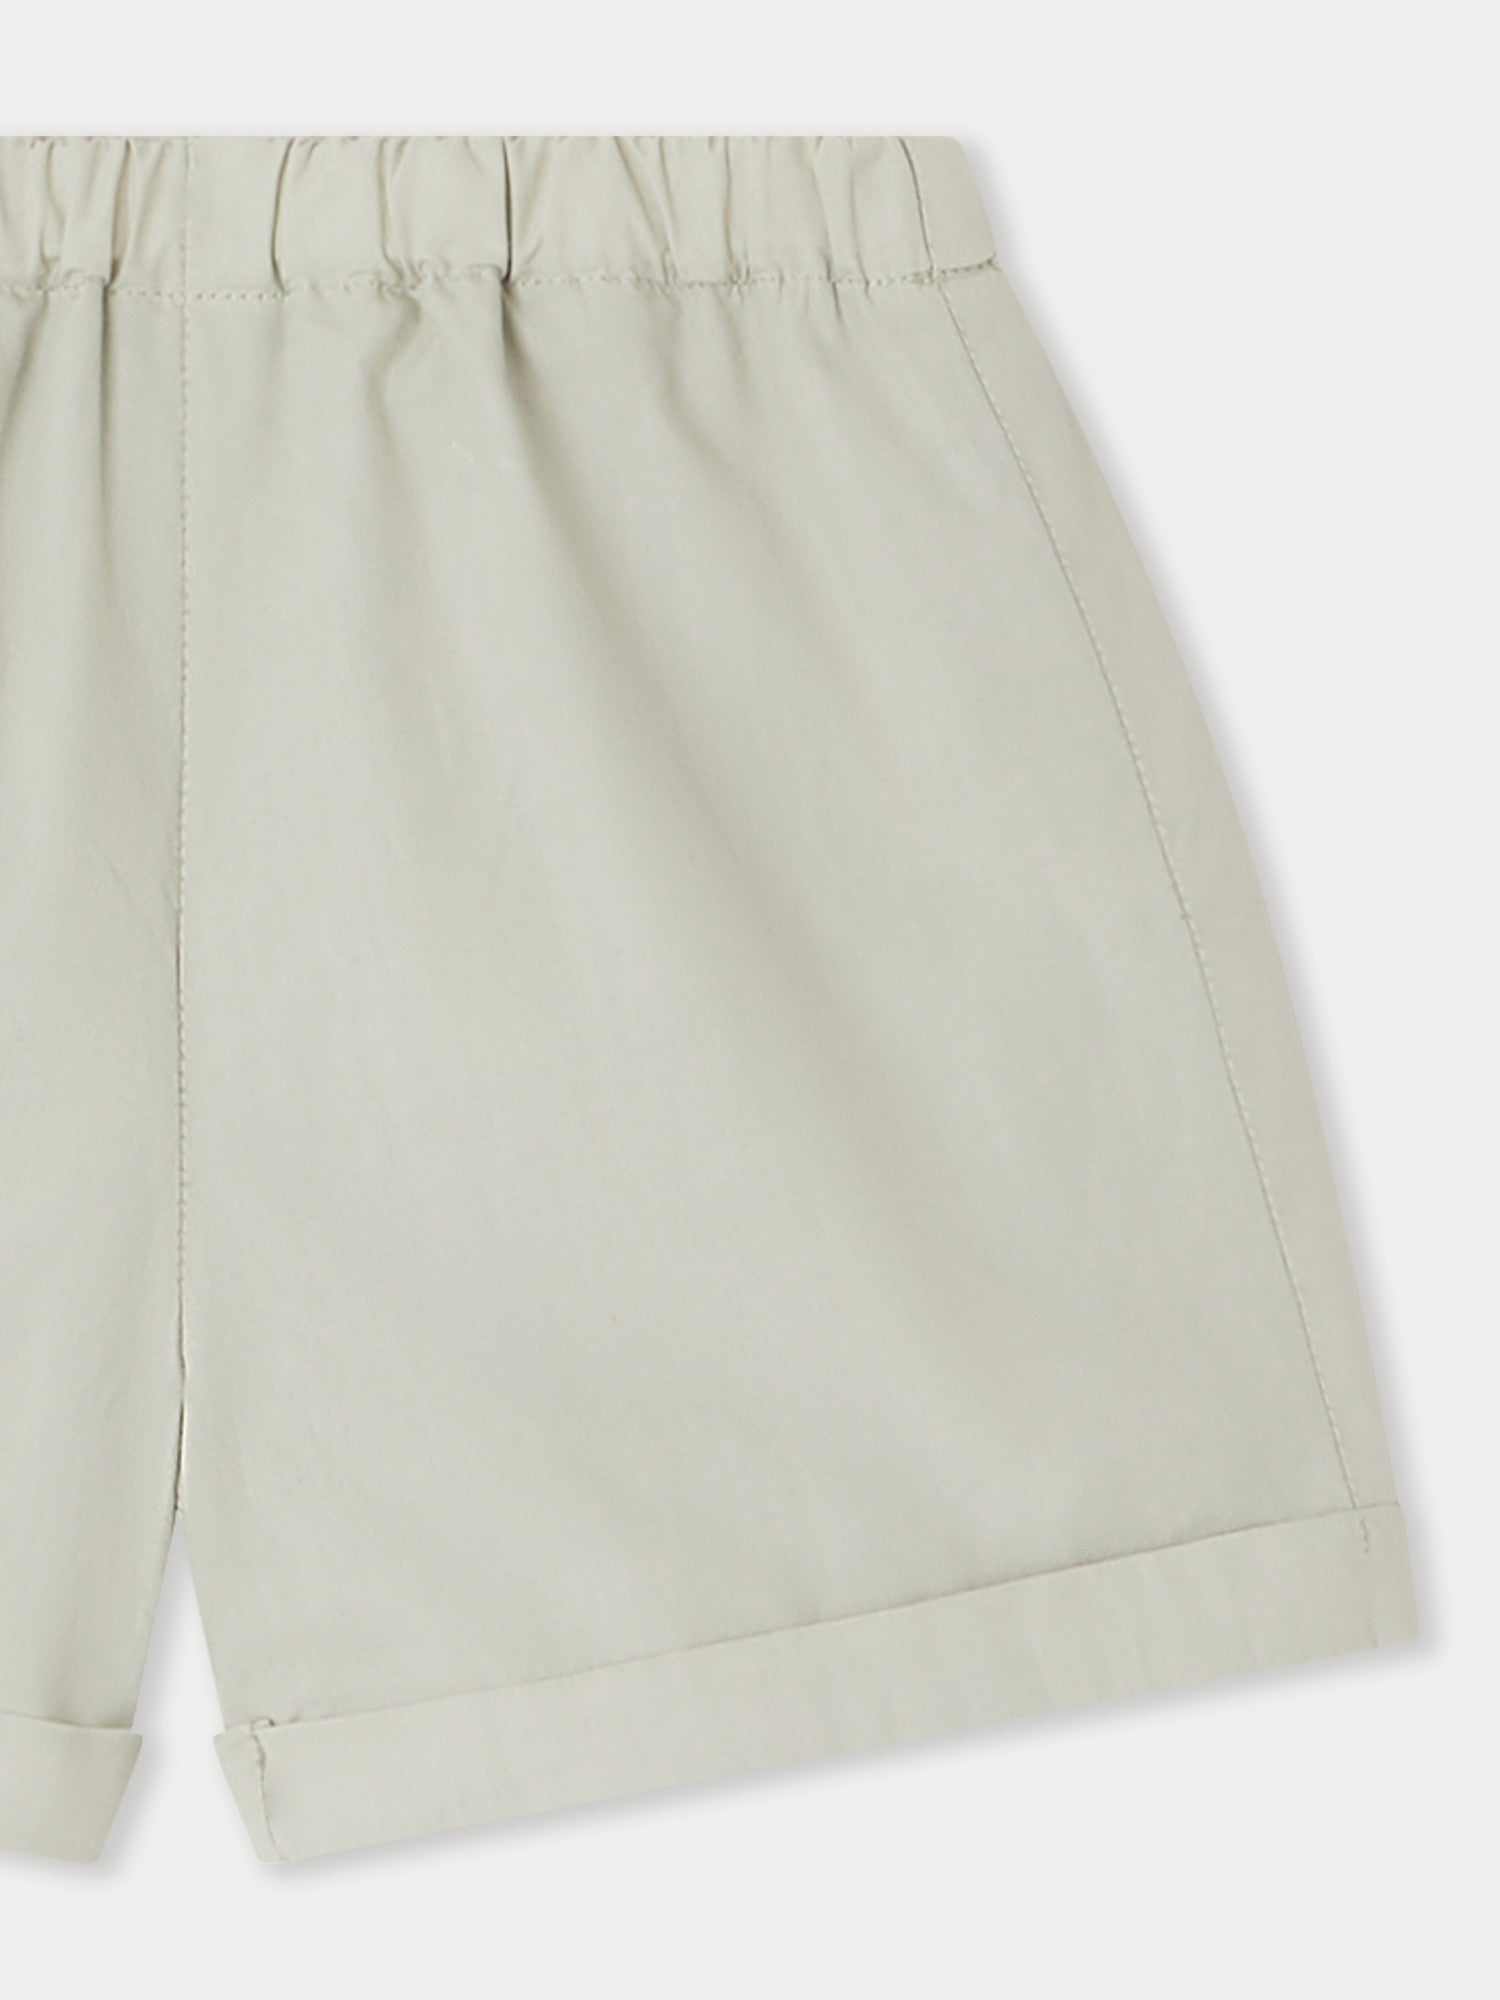 Baby Boys & Girls Mint Cotton Shorts